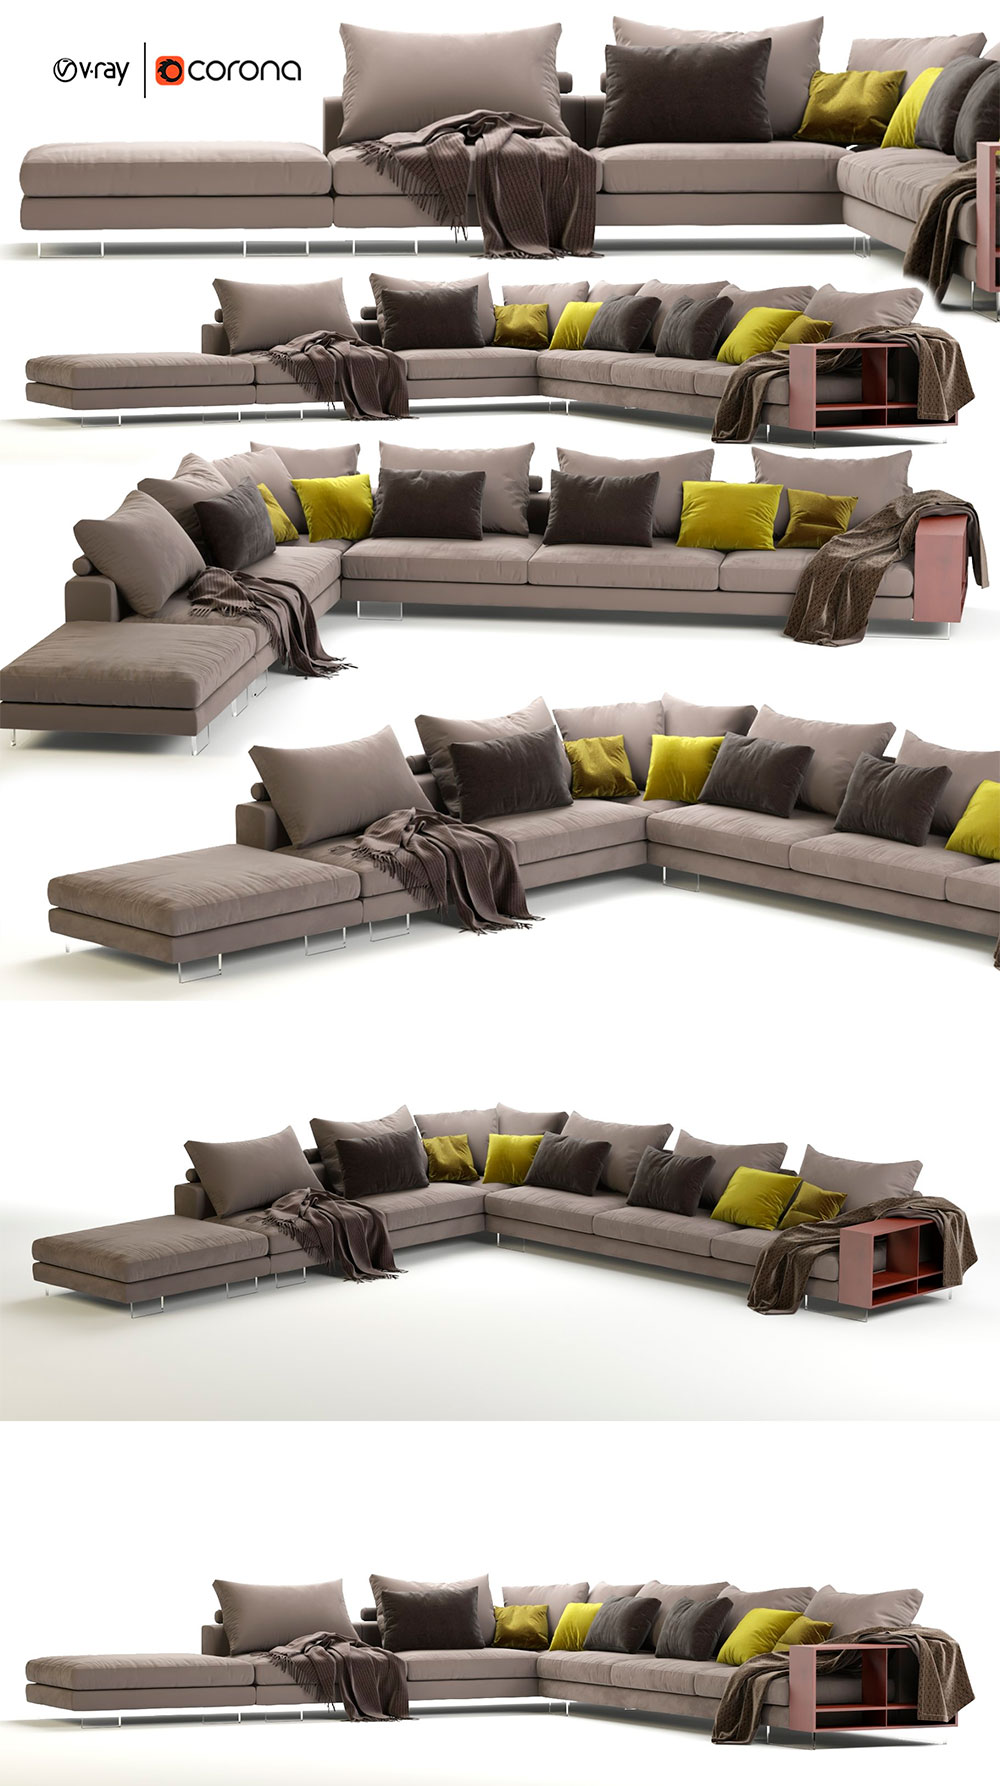 Flexform lightpiece modular sofa, picture for pinterest.